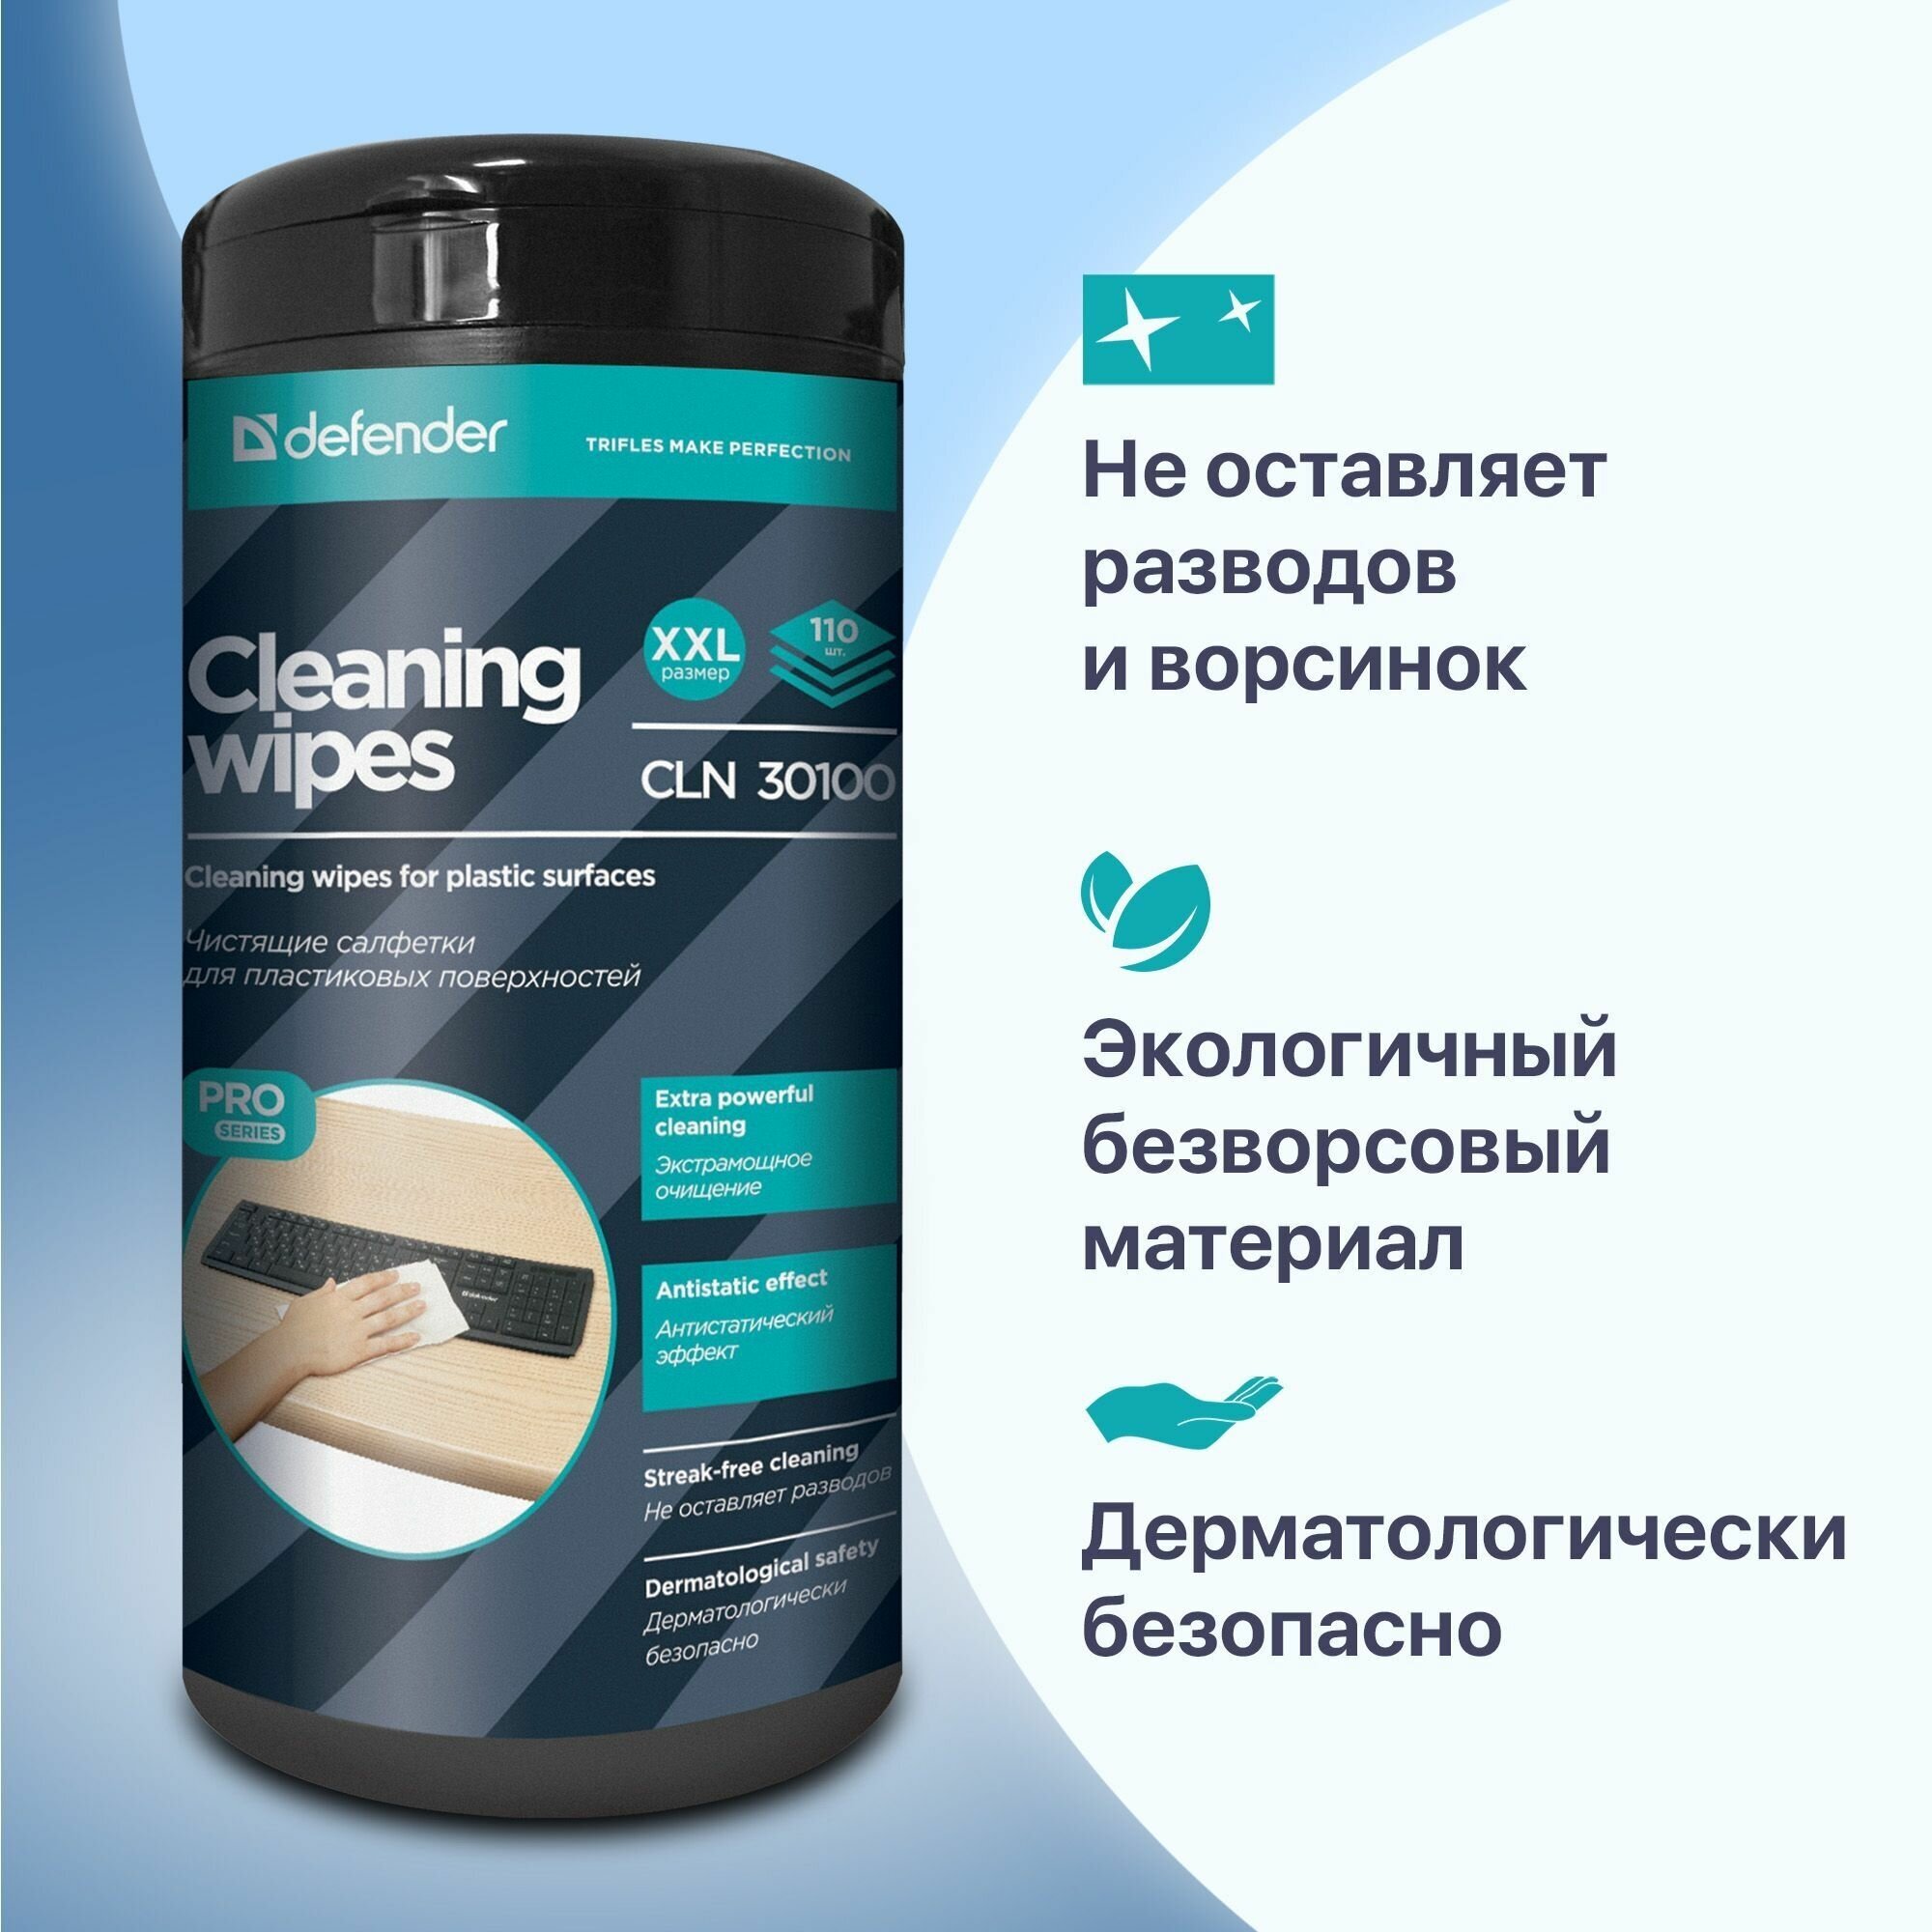 Defender Cleaning Wipes CLN 30100 влажные салфетки 110 